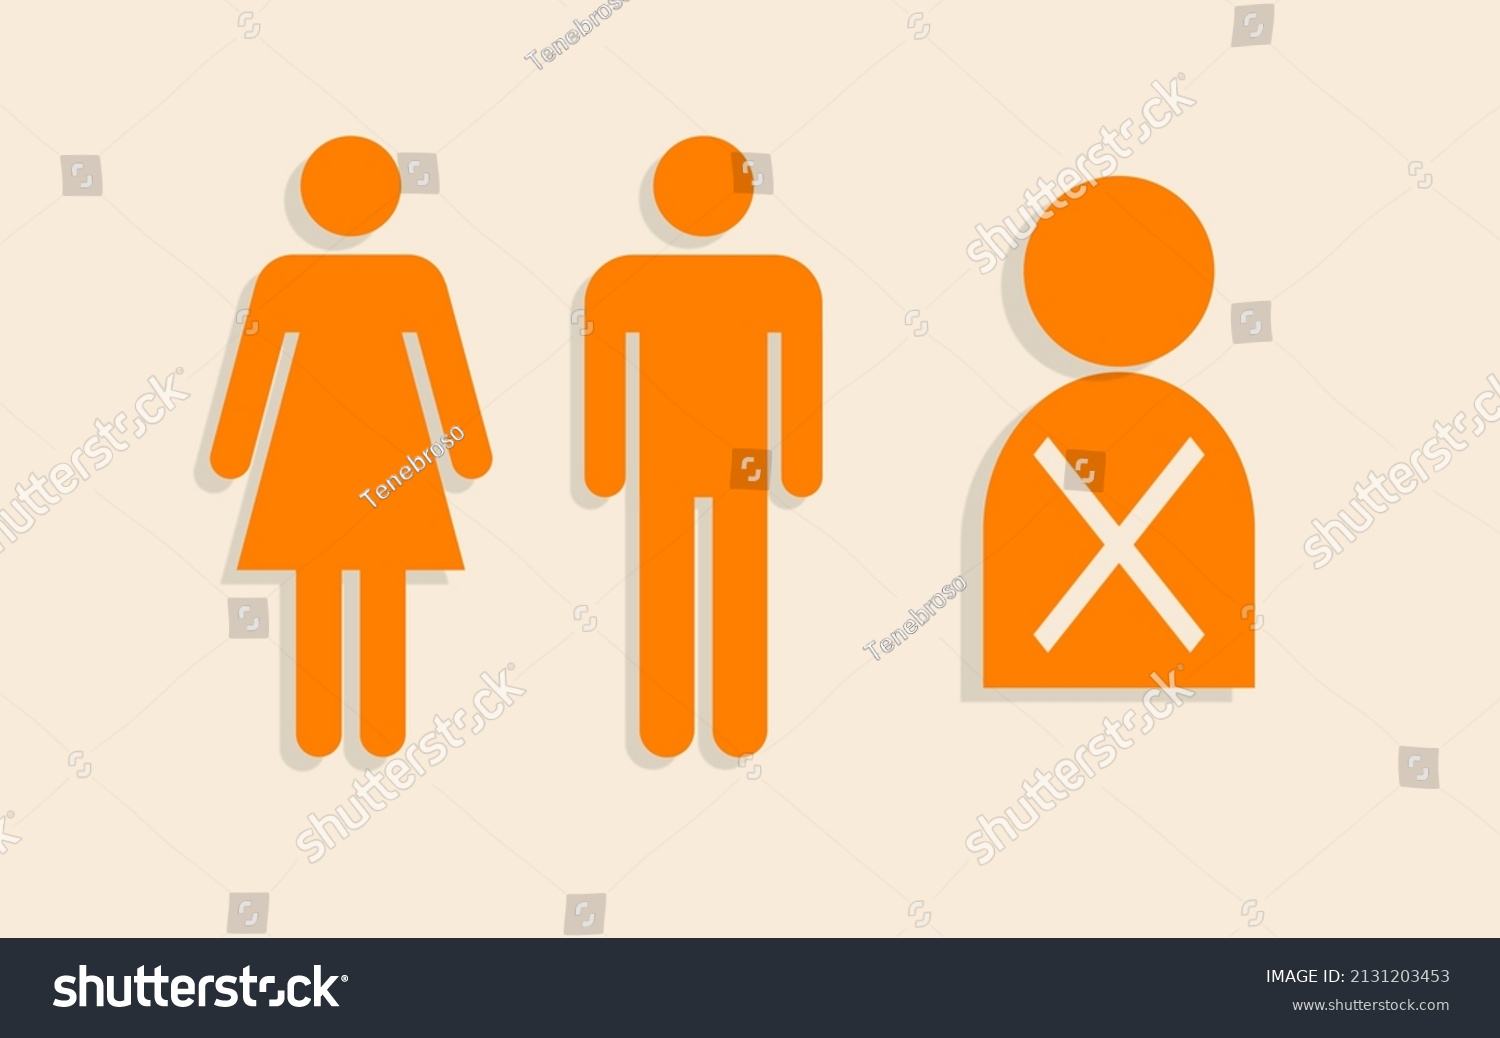 Third Gender Classifications Nonbinary Intersex People Stock Illustration 2131203453 Shutterstock 8578